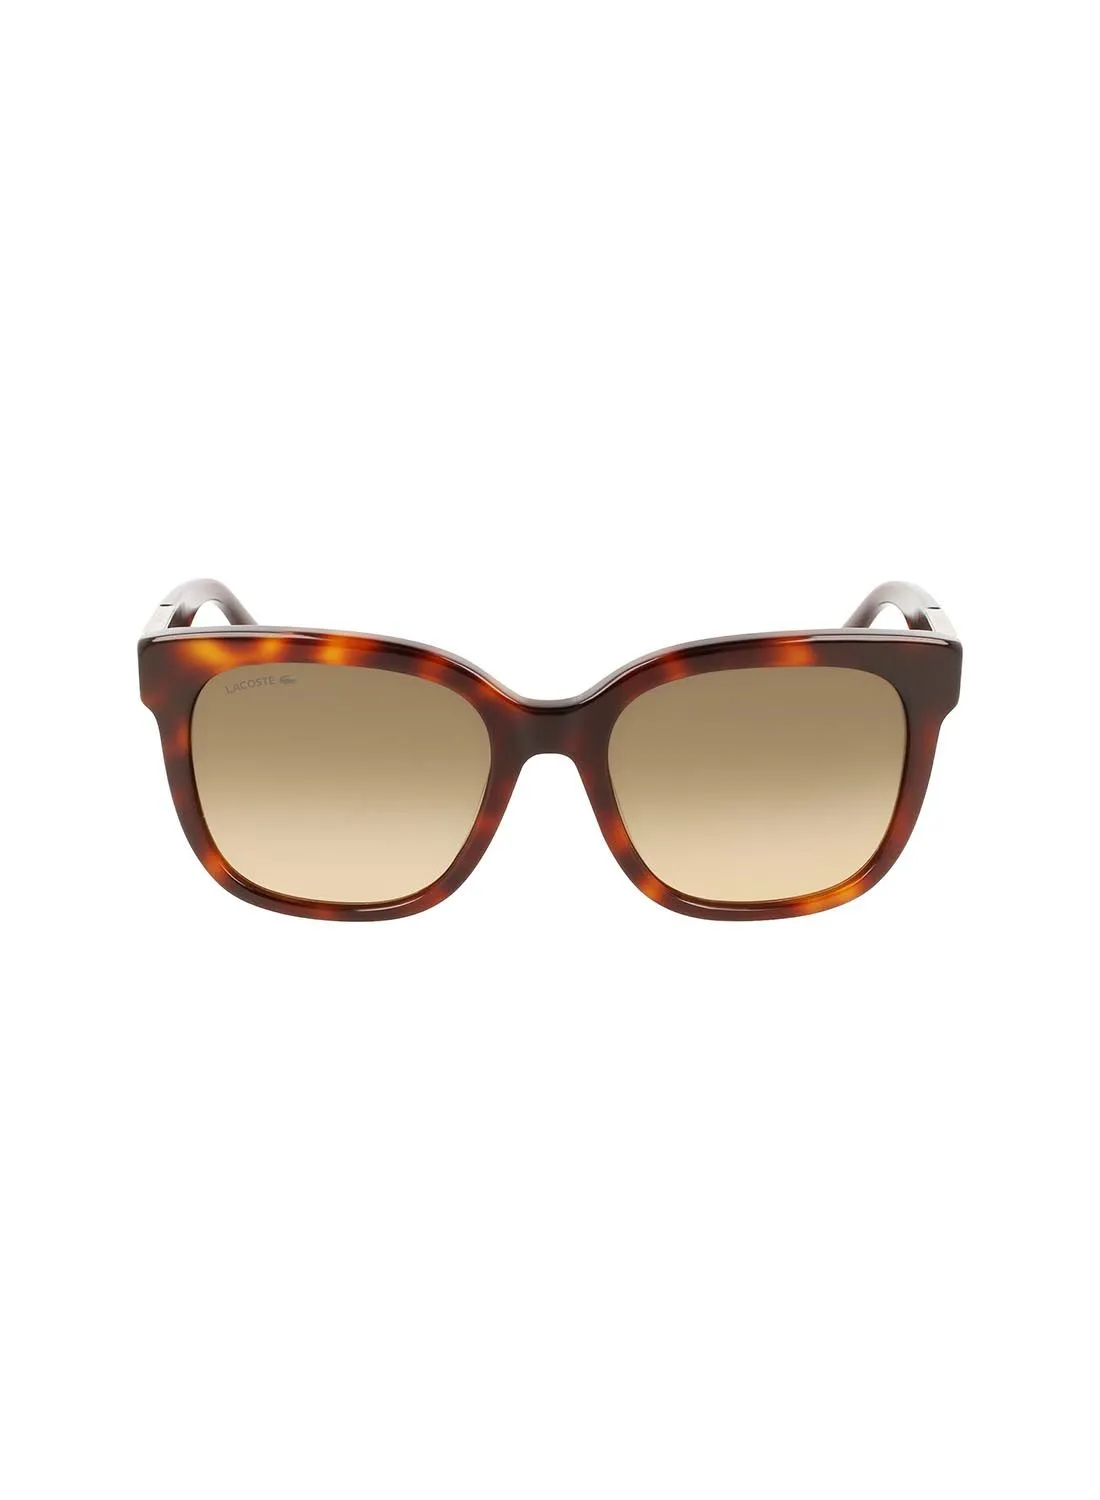 LACOSTE UV Rays Protection Eyewear Sunglasses L970S-230-5519